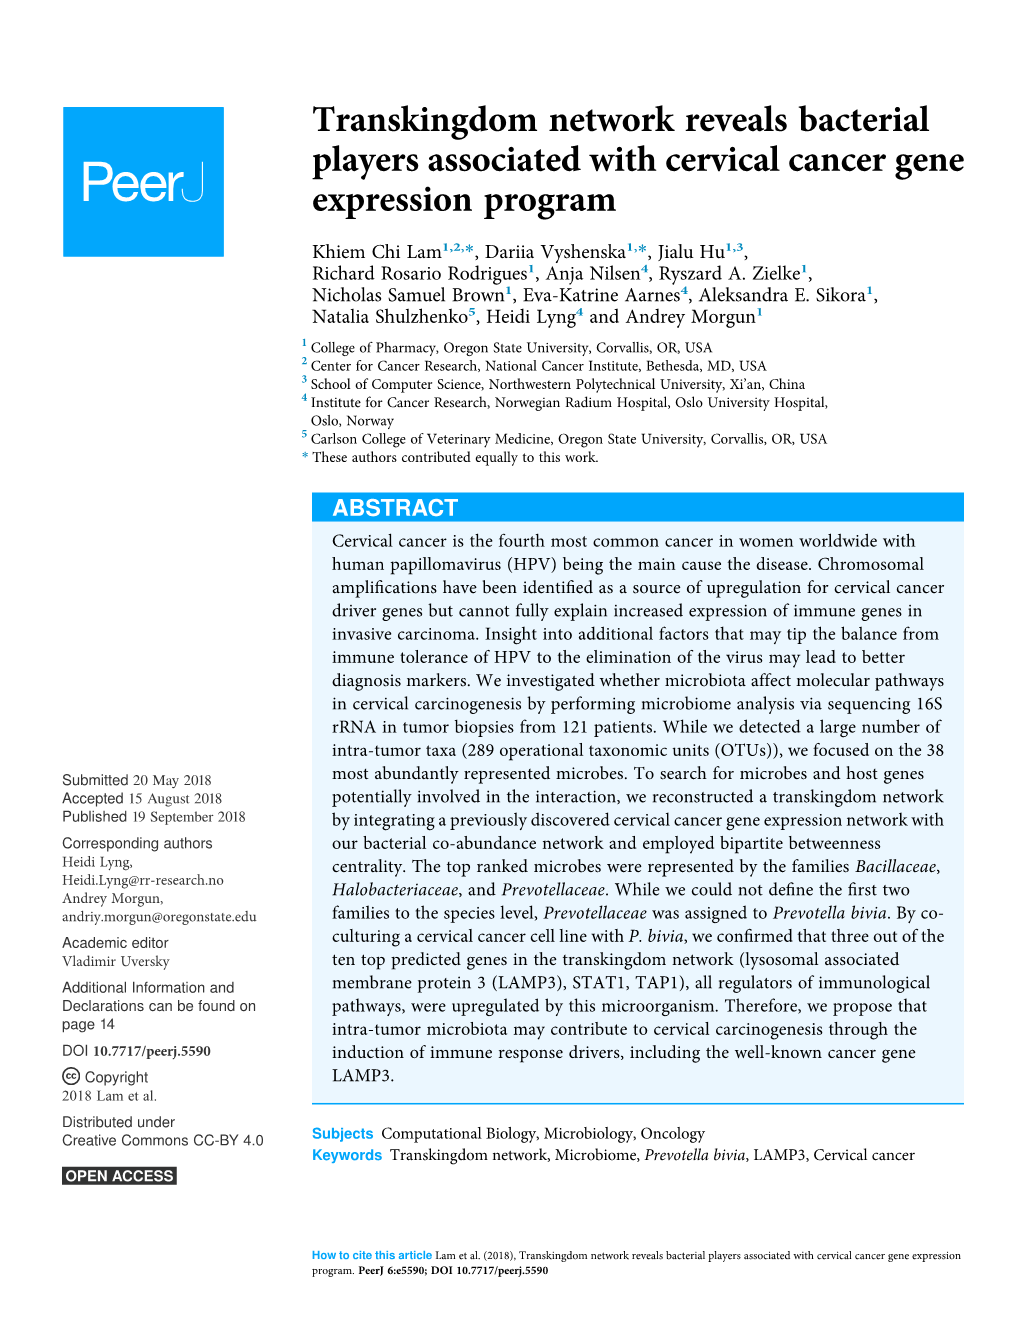 Transkingdom Network Reveals Bacterial Players Associated with Cervical Cancer Gene Expression Program